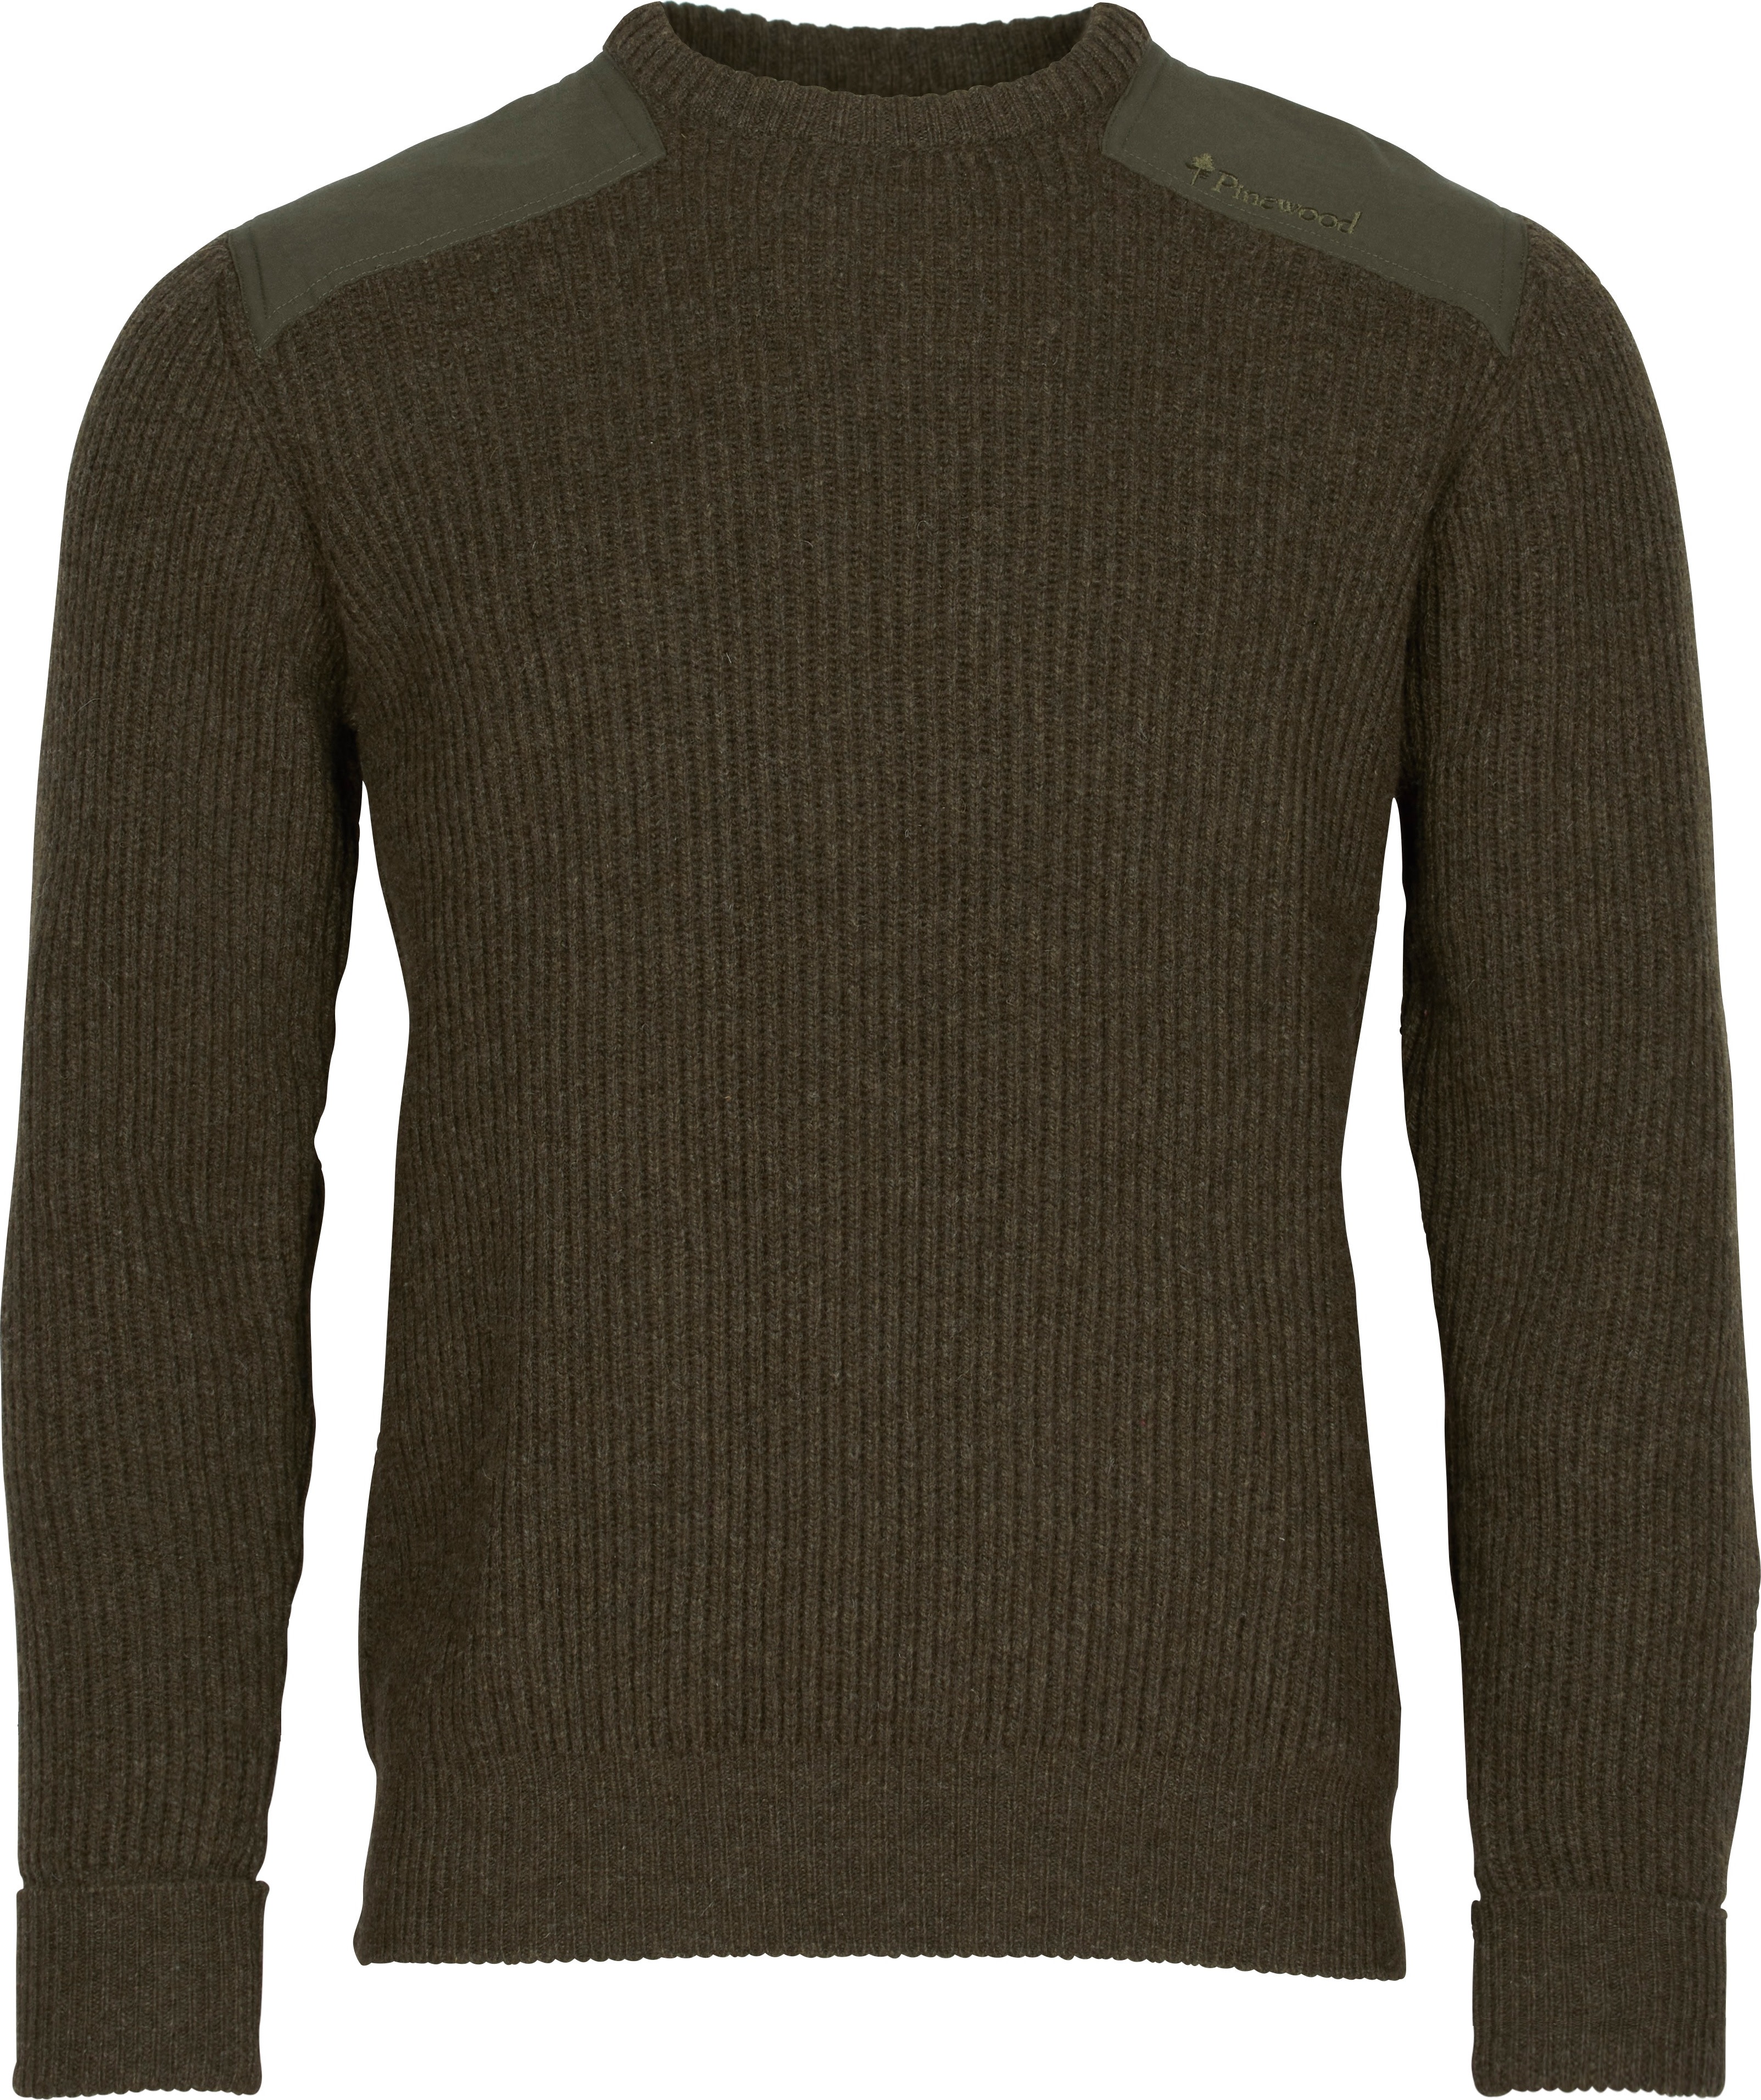 Pinewood Men’s Lappland Rough Sweater Mossgreen Melange